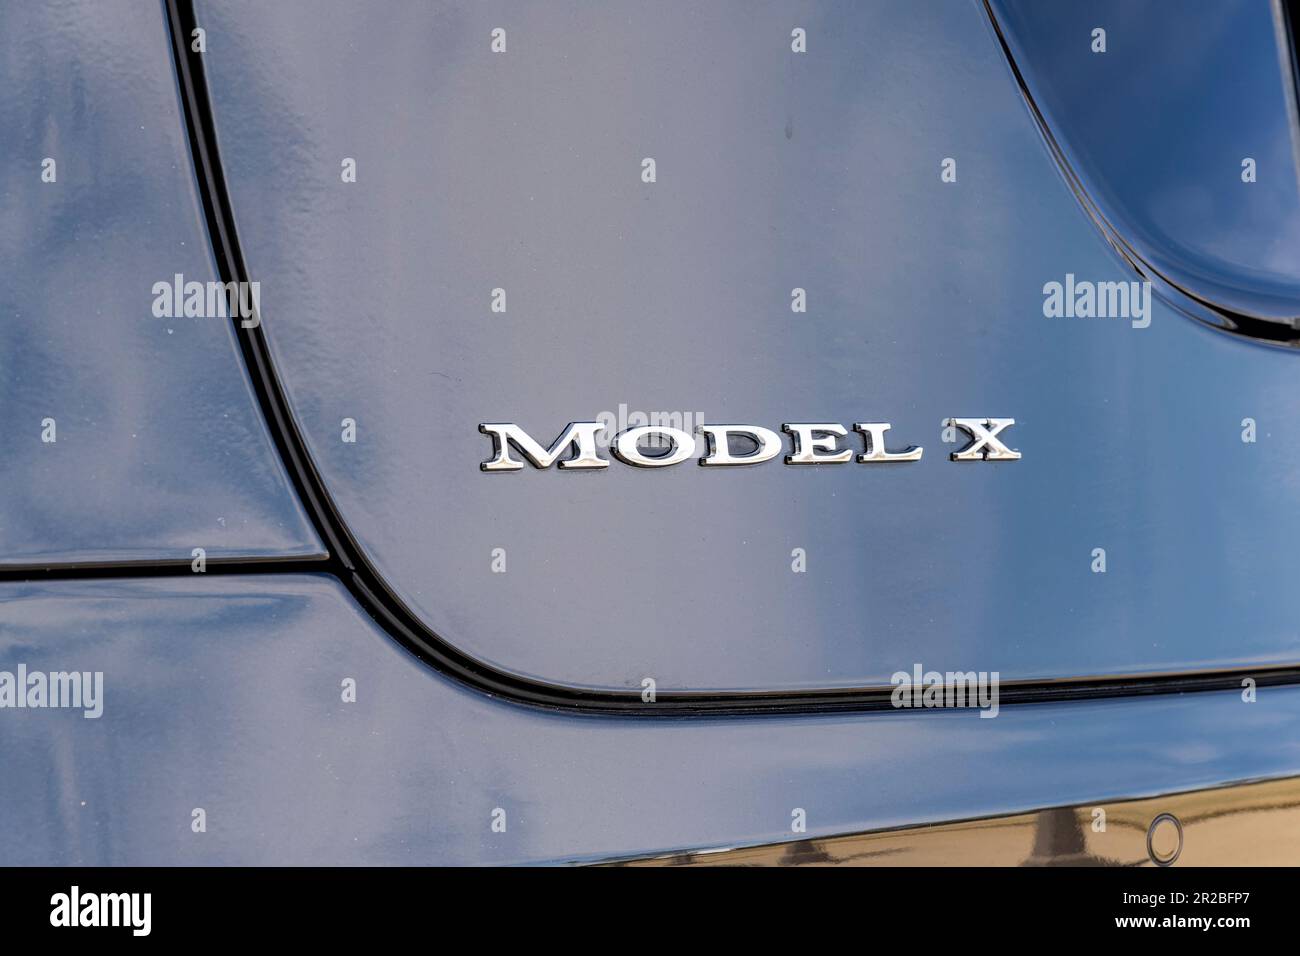 Tesla Model X badge or logo or insignia on the rear of a Tesla passenger car. Stock Photo